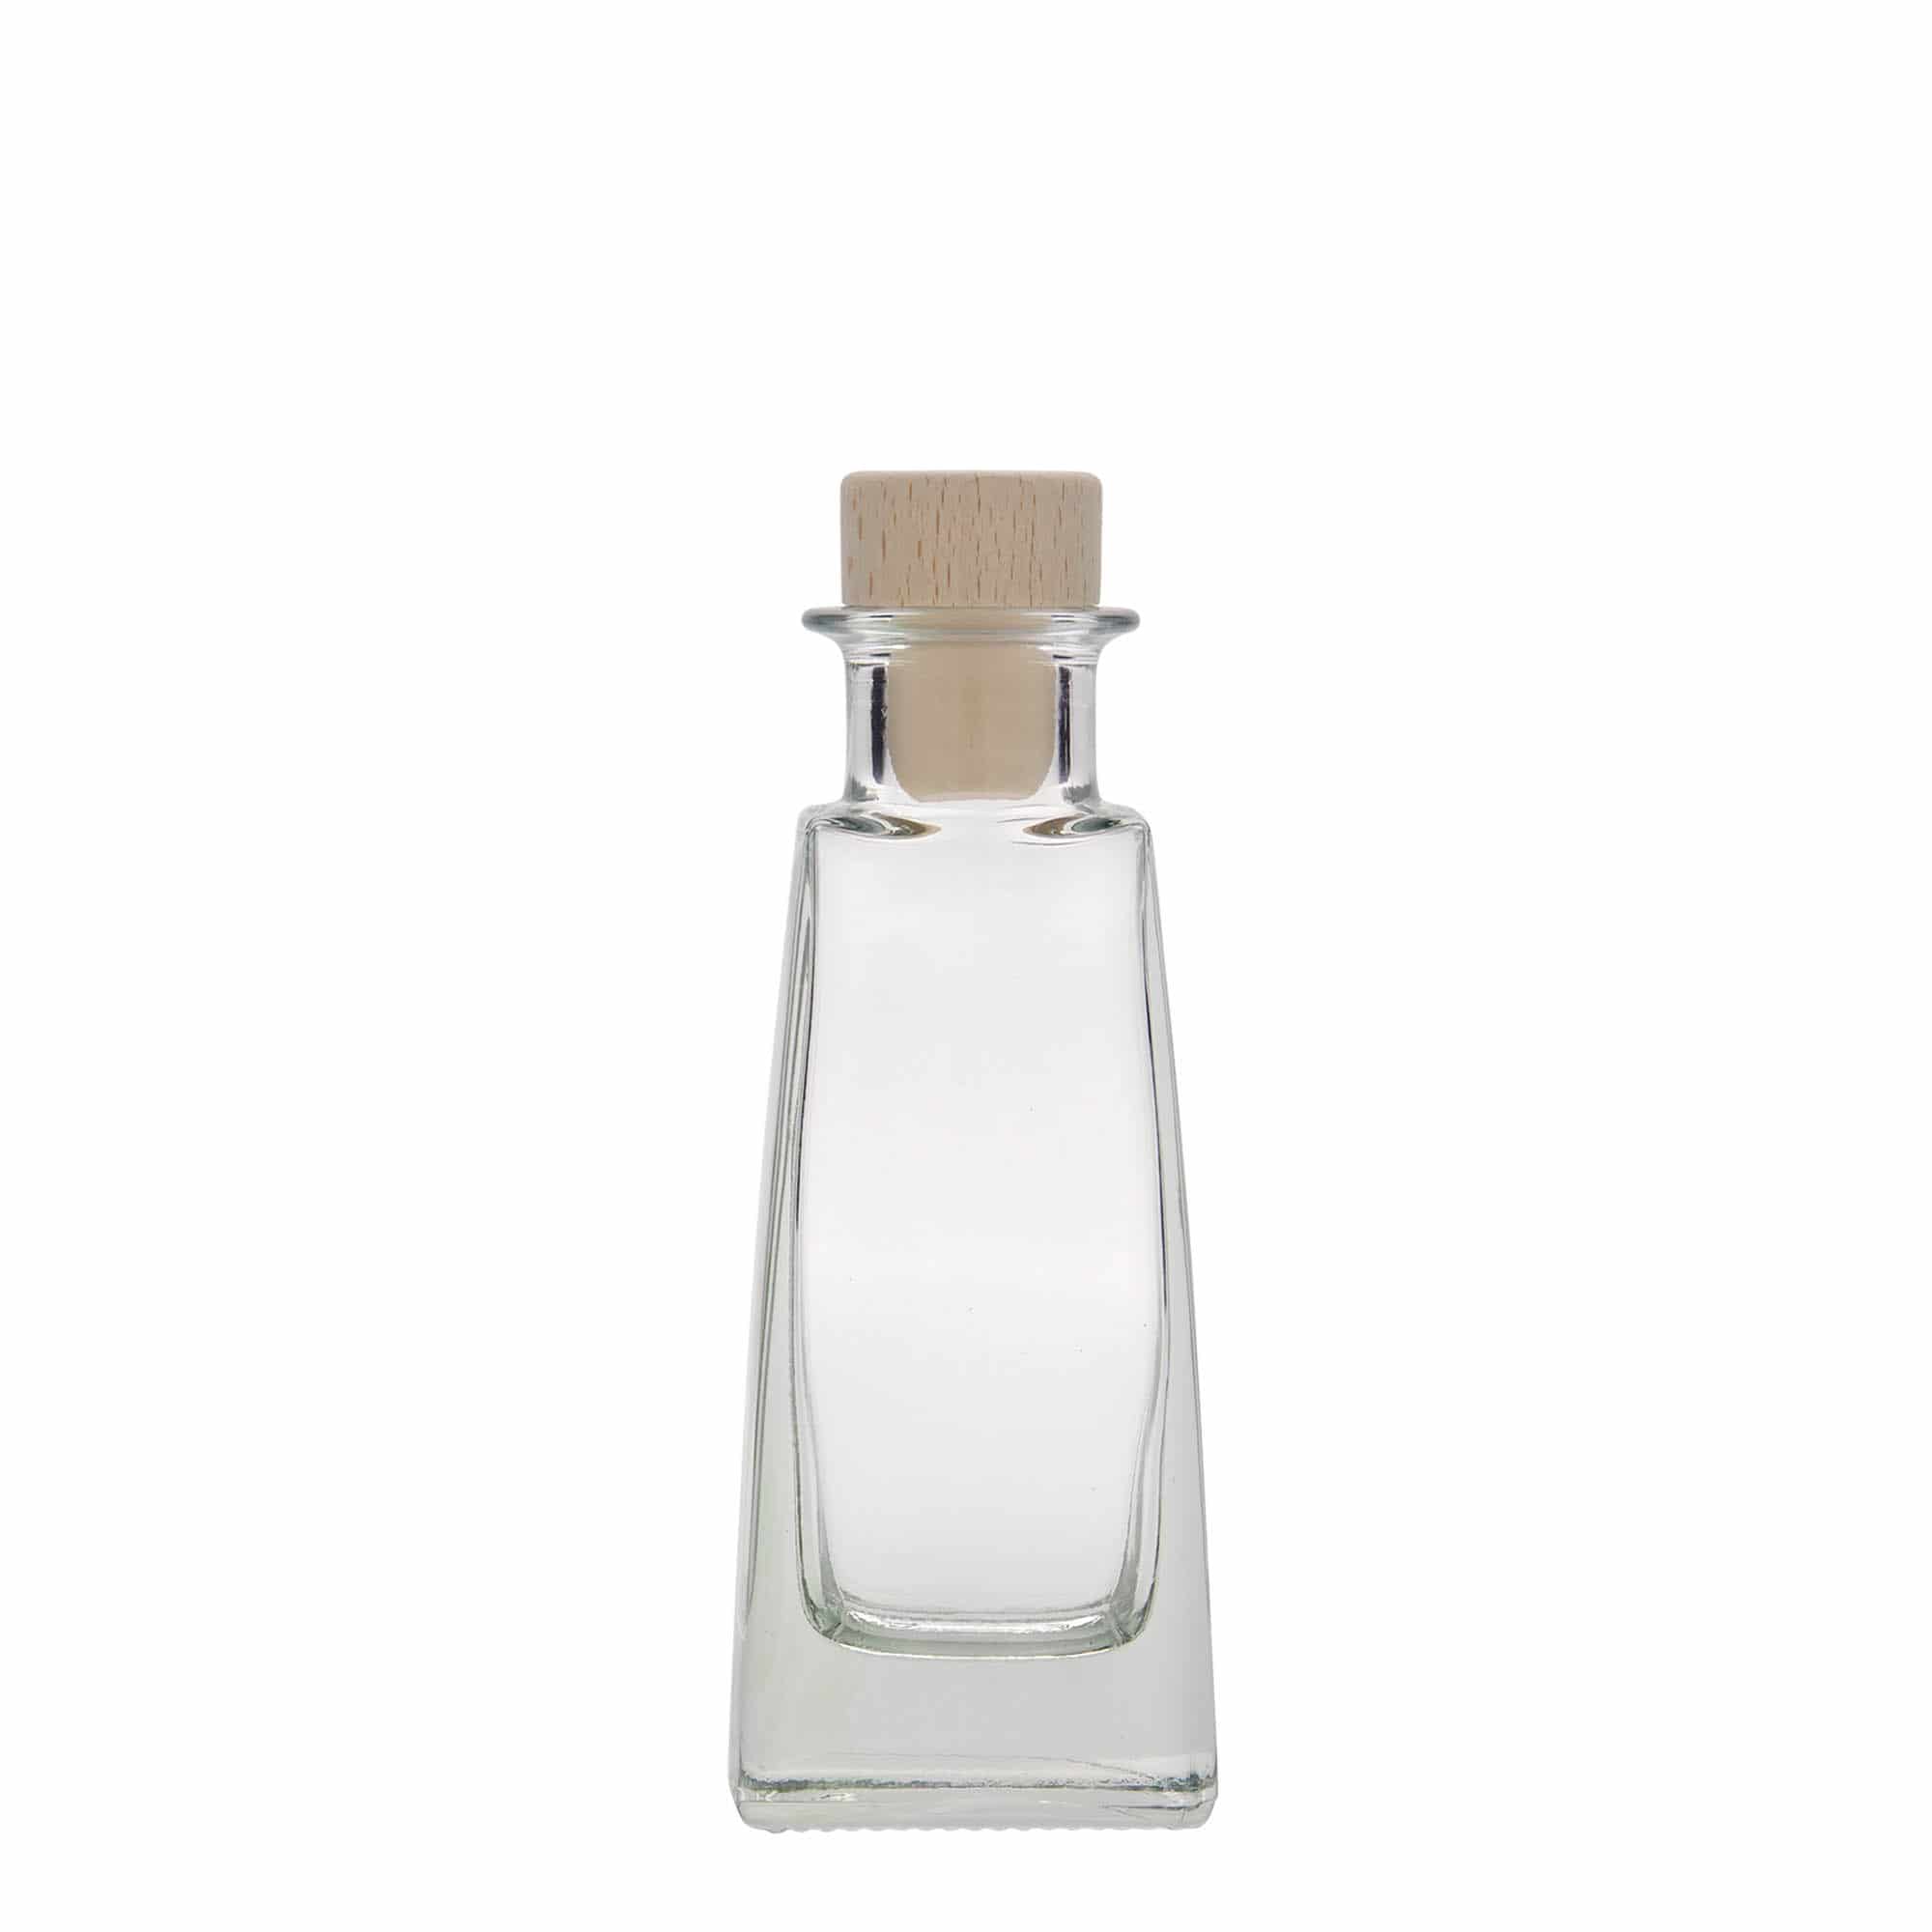 100 ml glass bottle 'Timmy', rectangular, closure: cork